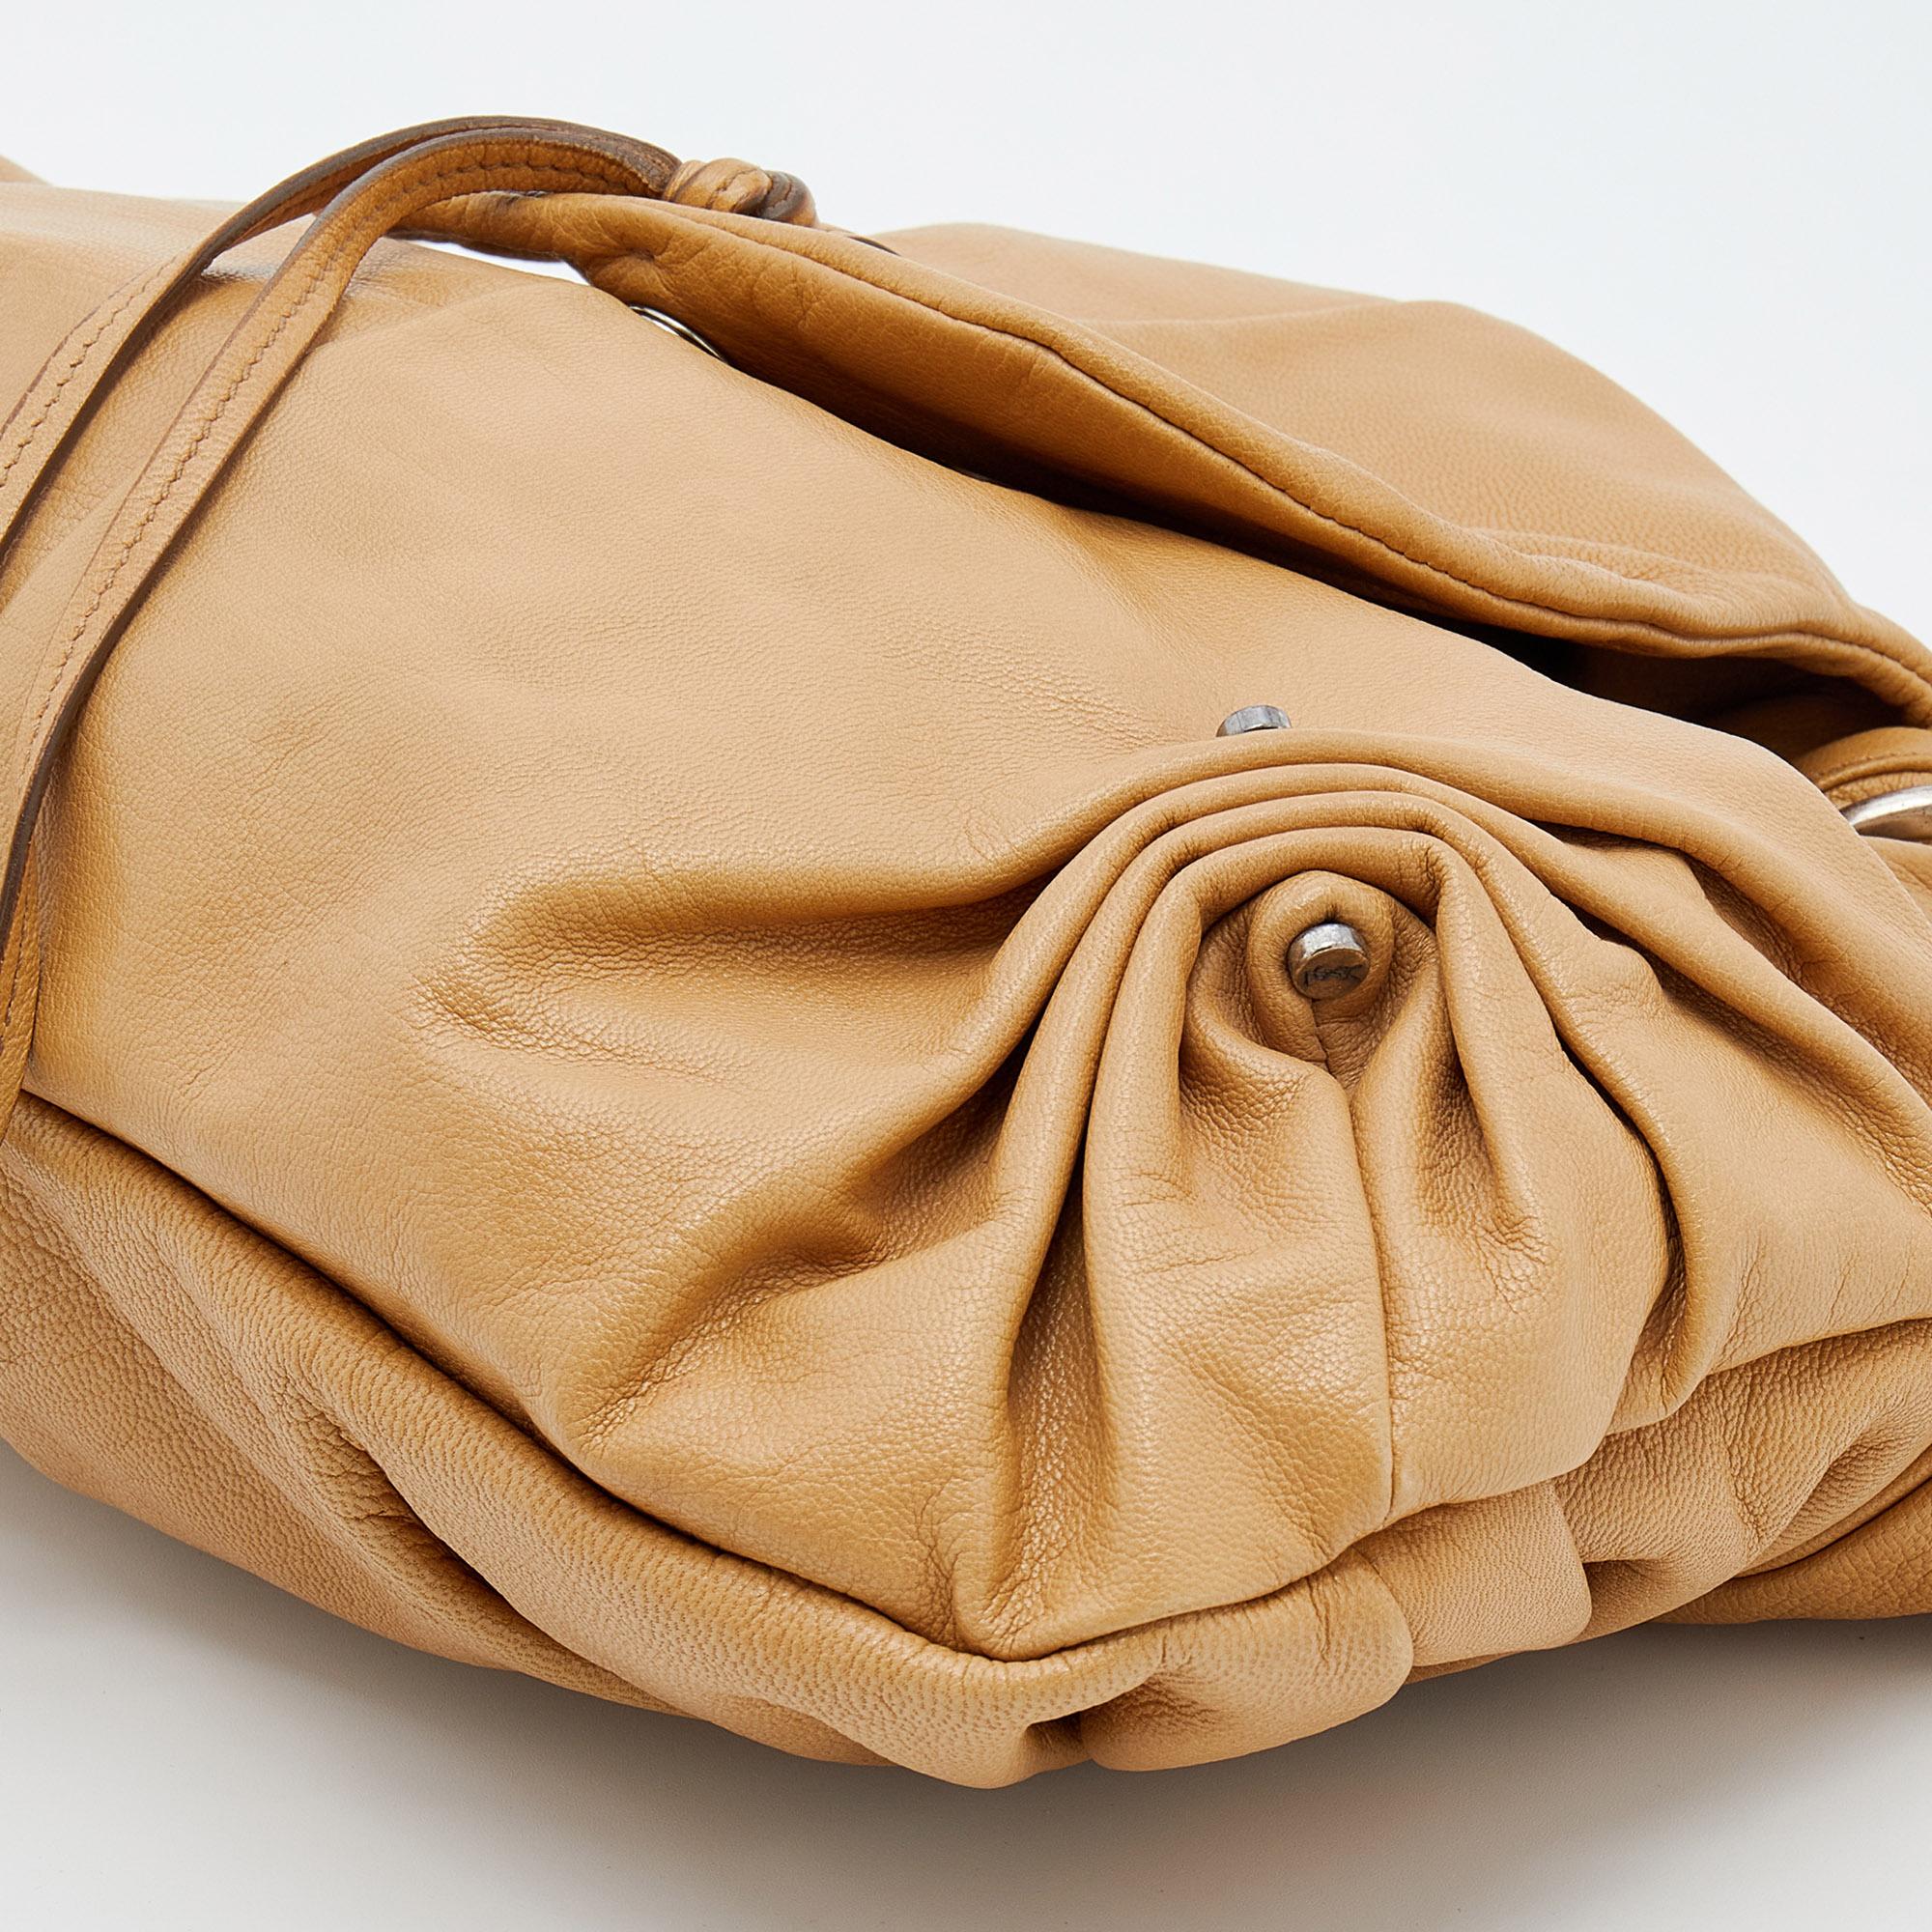 Yves Saint Laurent By Tom Ford Tan Leather Gathered Shoulder Bag 4